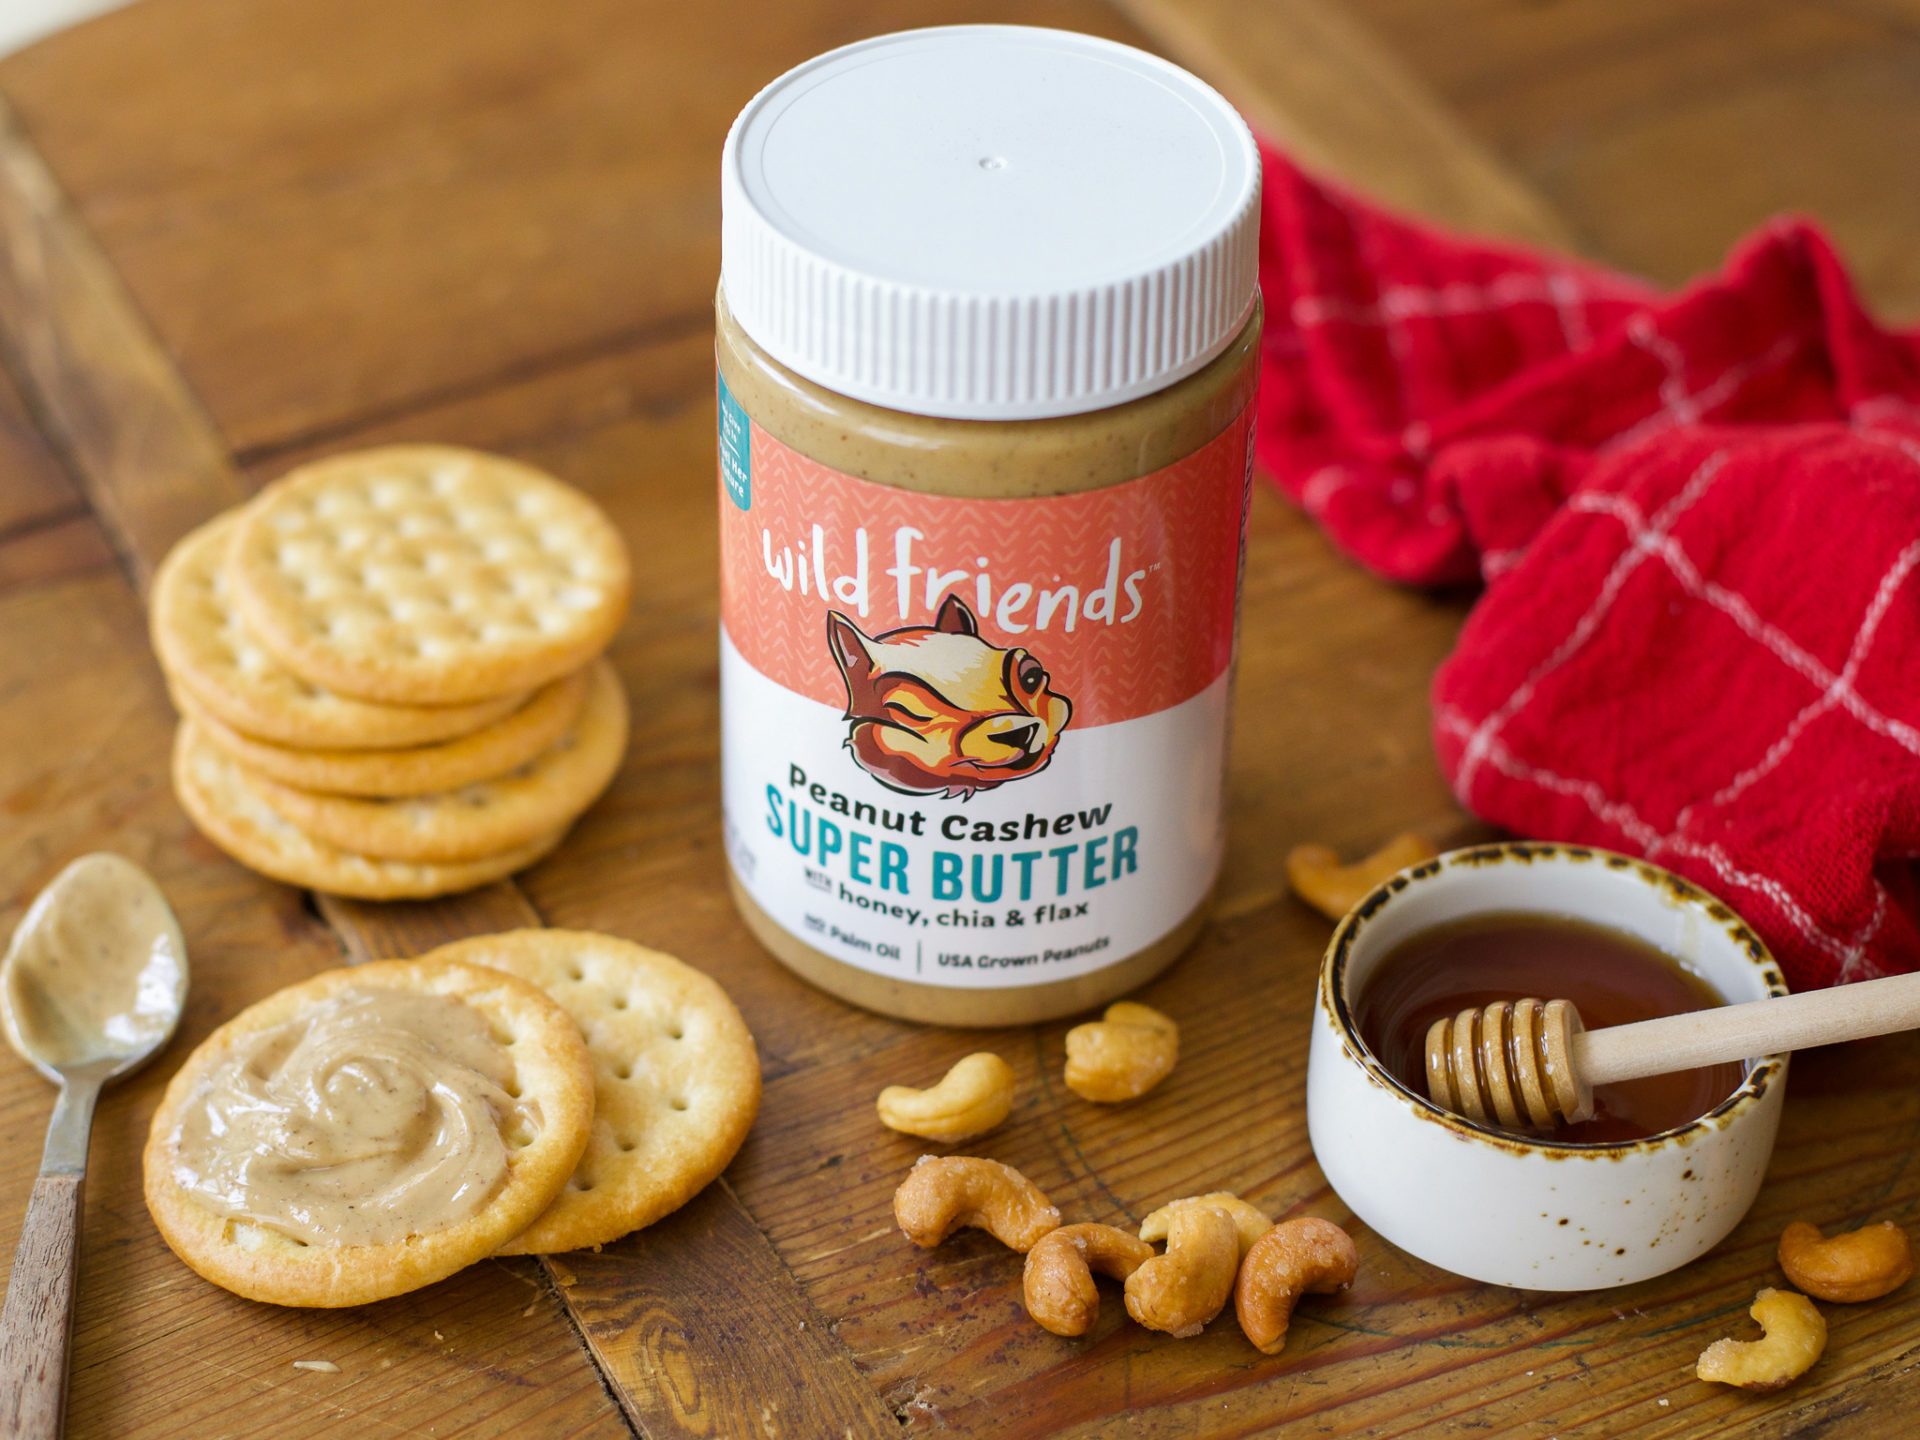 Wild Friends Peanut Cashew Super Butter As Low As $3.99 At Kroger – Ends 8/15